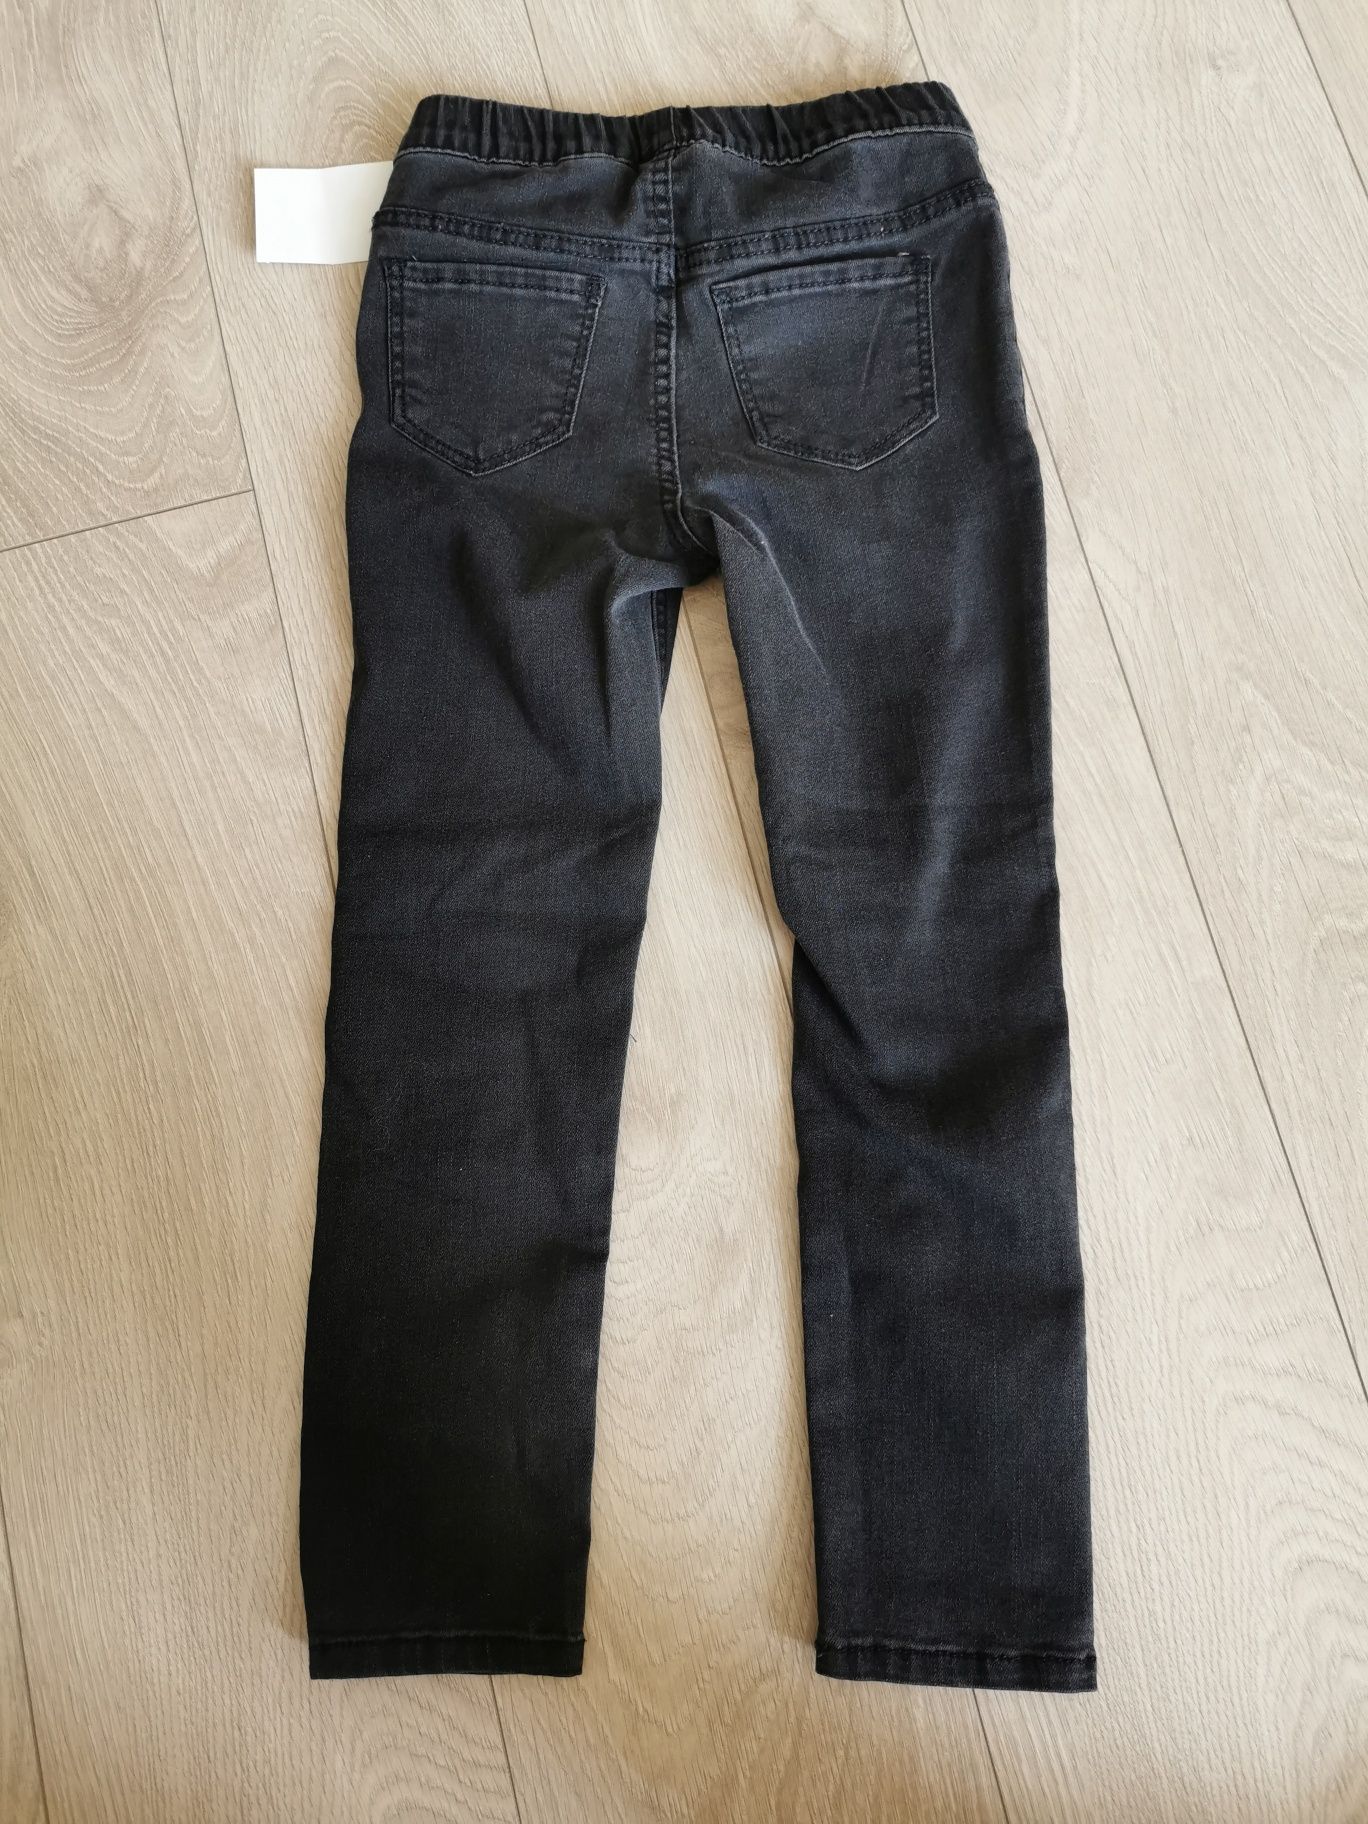 Jegginsy leginsy jeansy r. 104 H&M